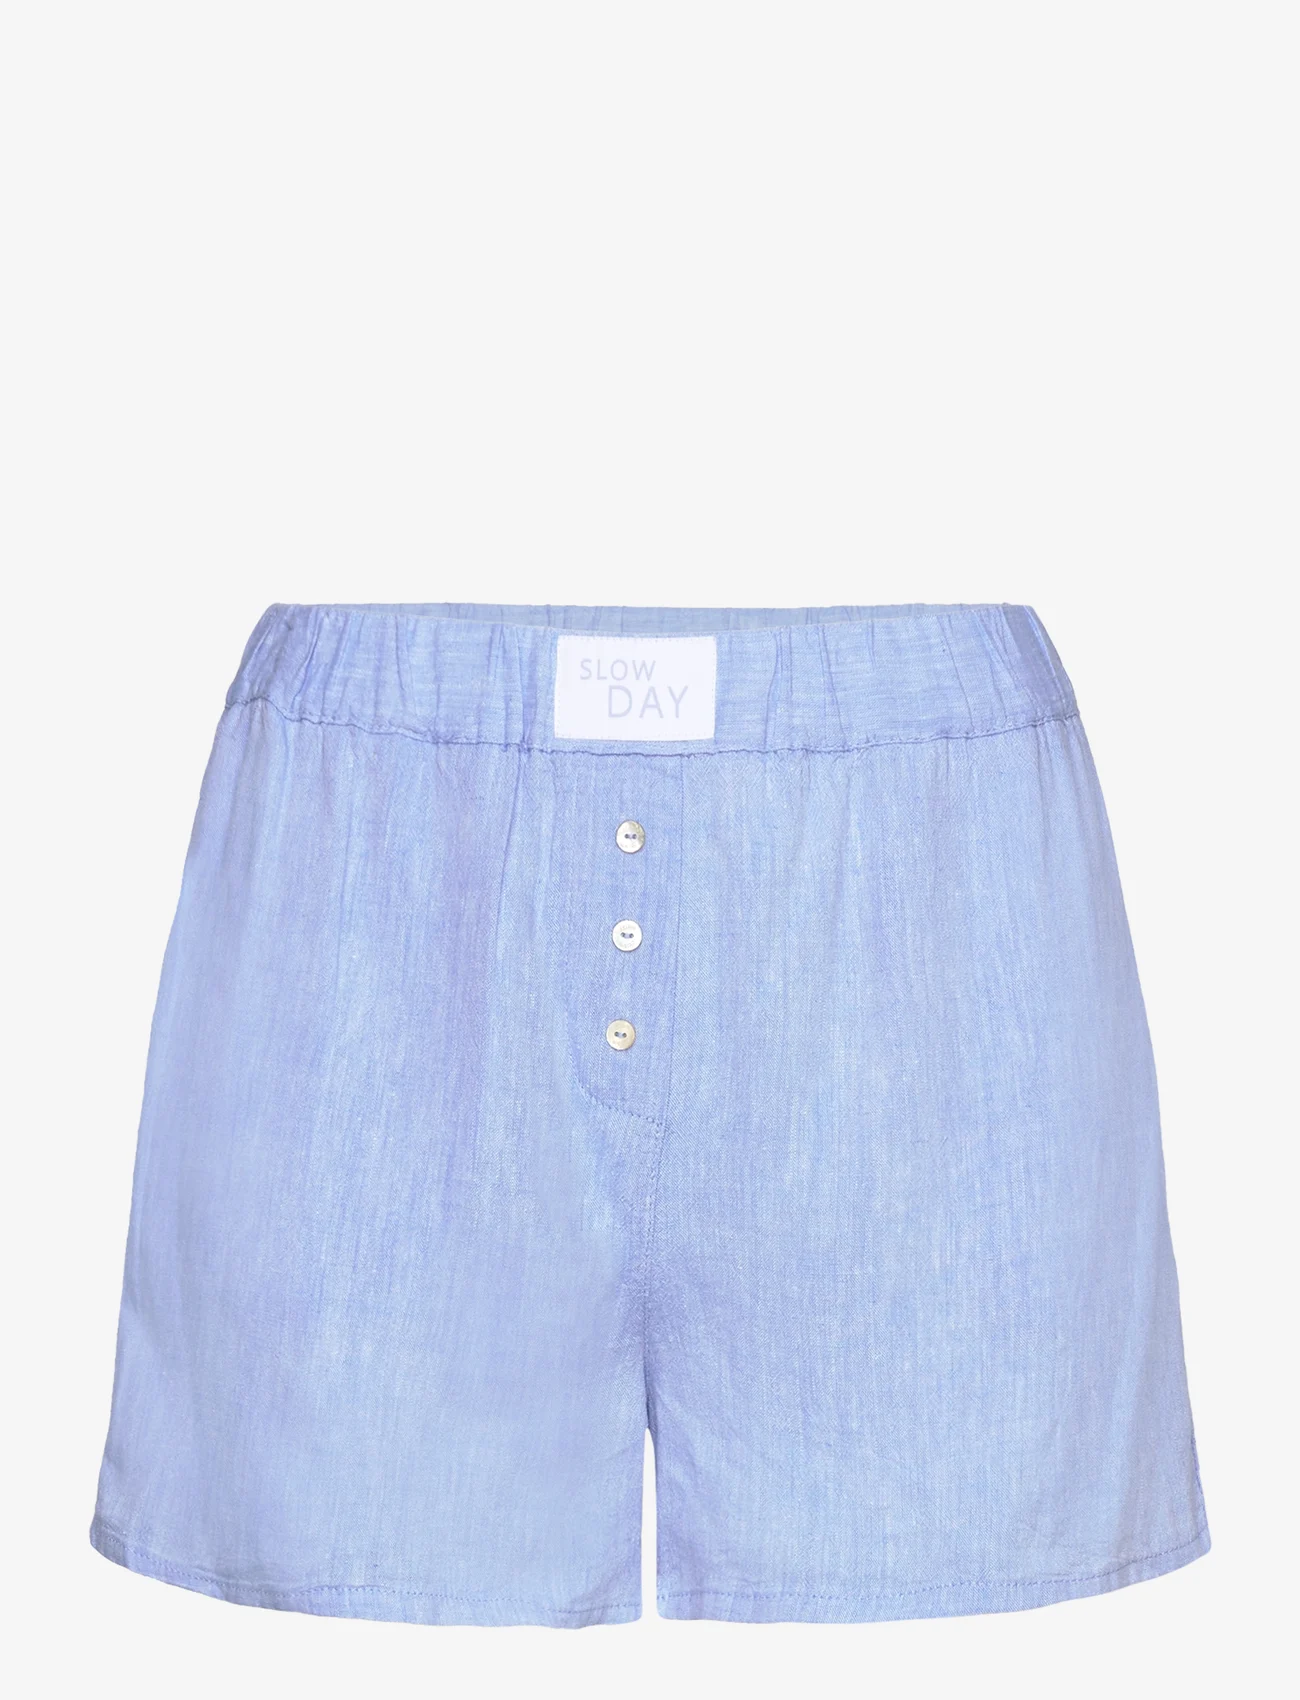 Etam - Justine - Short pyjama bottom - lowest prices - sky blue - 0